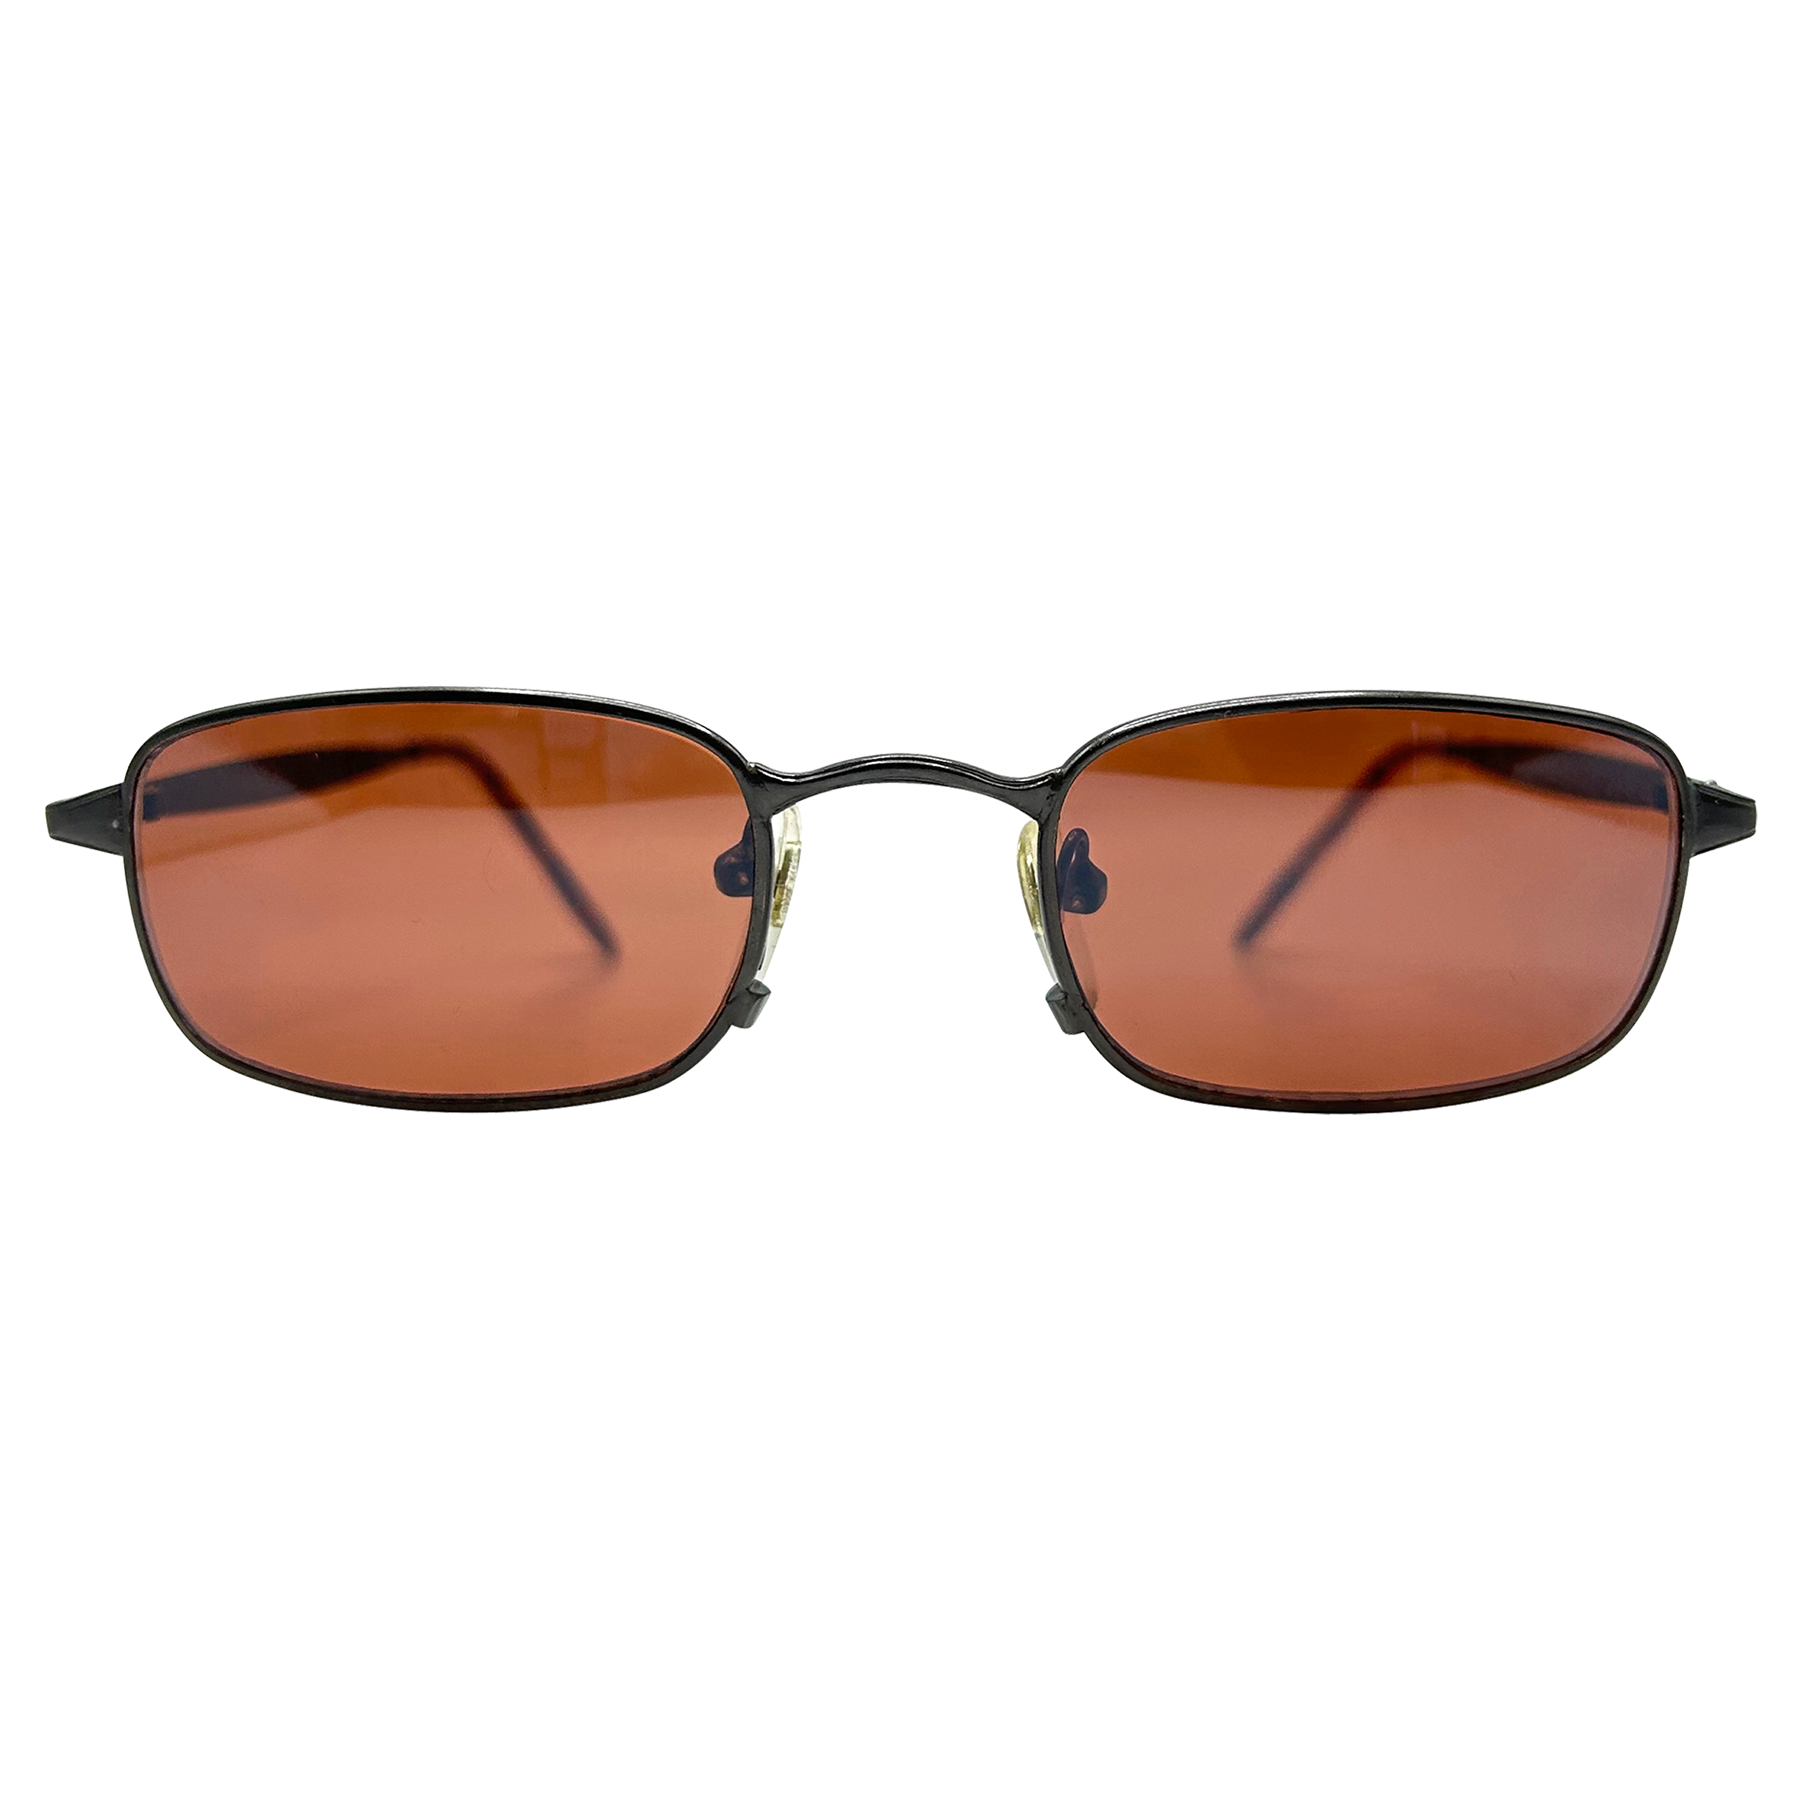 ROBERT Square 90s Sunglasses | Blue-Blocker | Day Driving